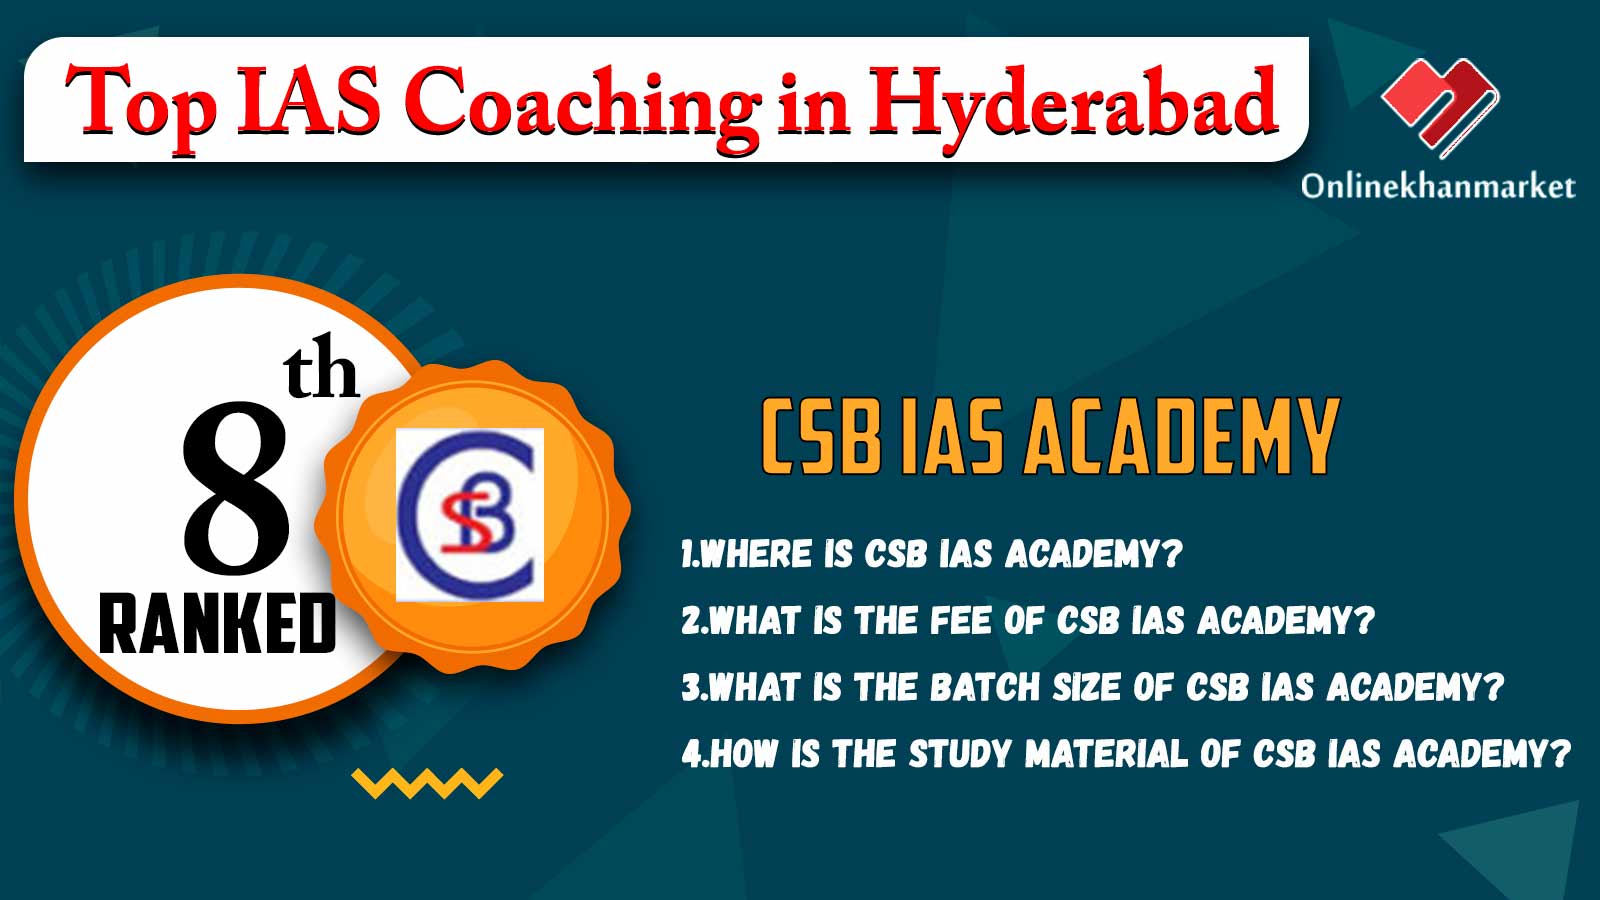 Best IAS Coaching in Hyderabad